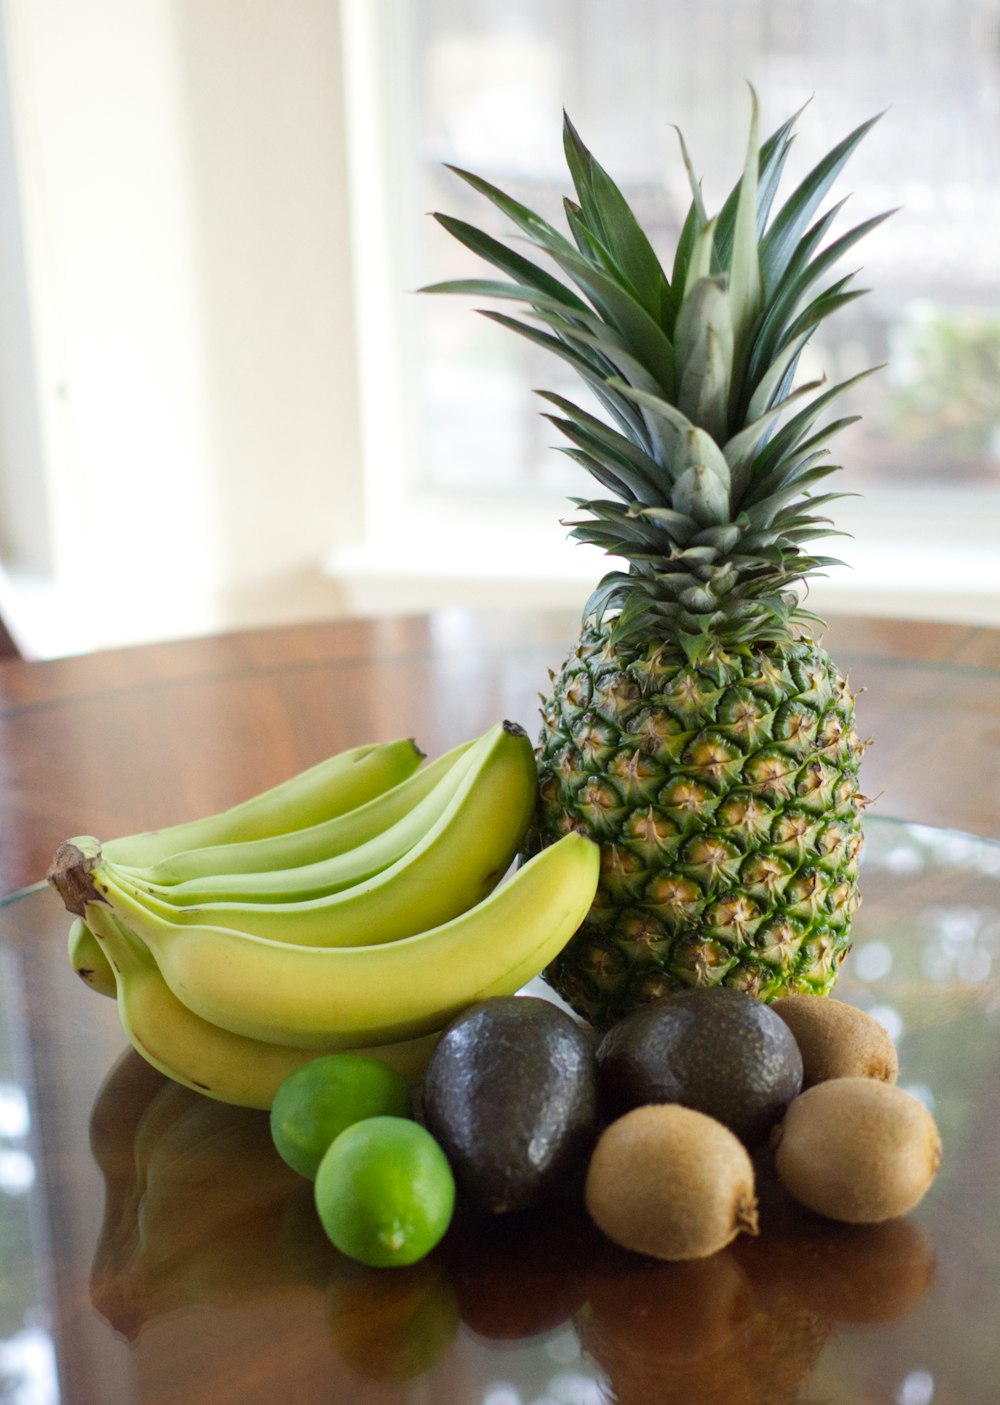 yellow banana fruit beside green and yellow banana fruit